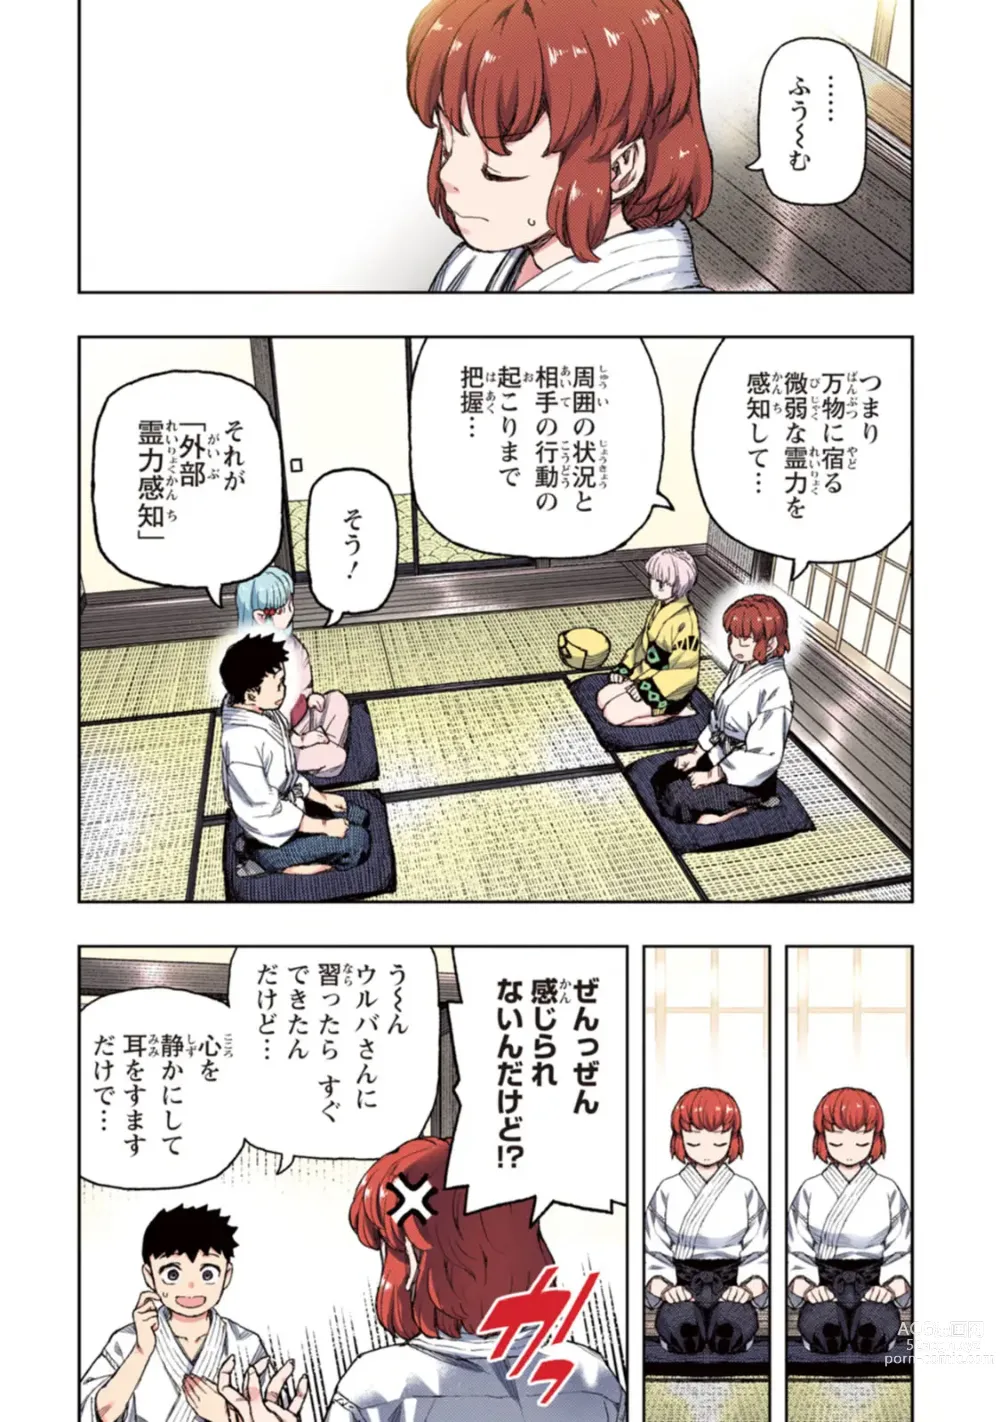 Page 19 of manga Tsugumomo Full Color Kan